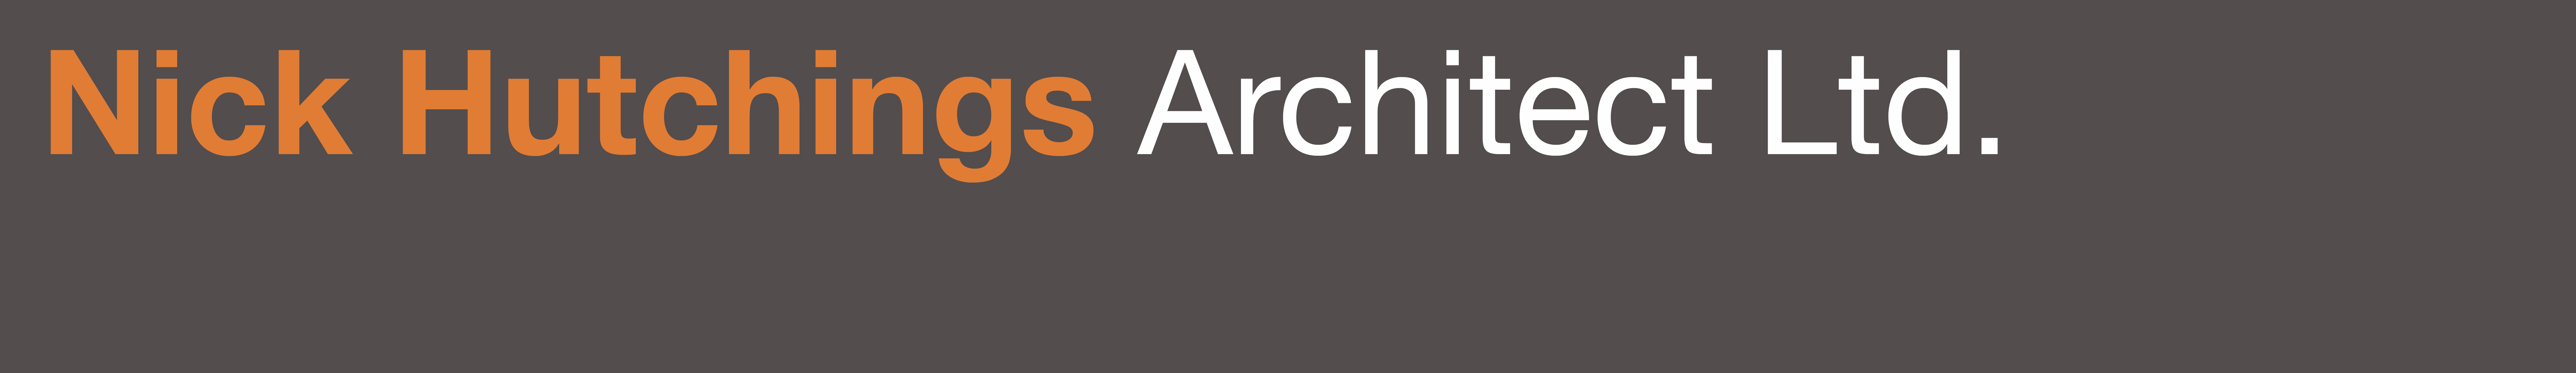 Nick Hutchings Architect Ltd logo